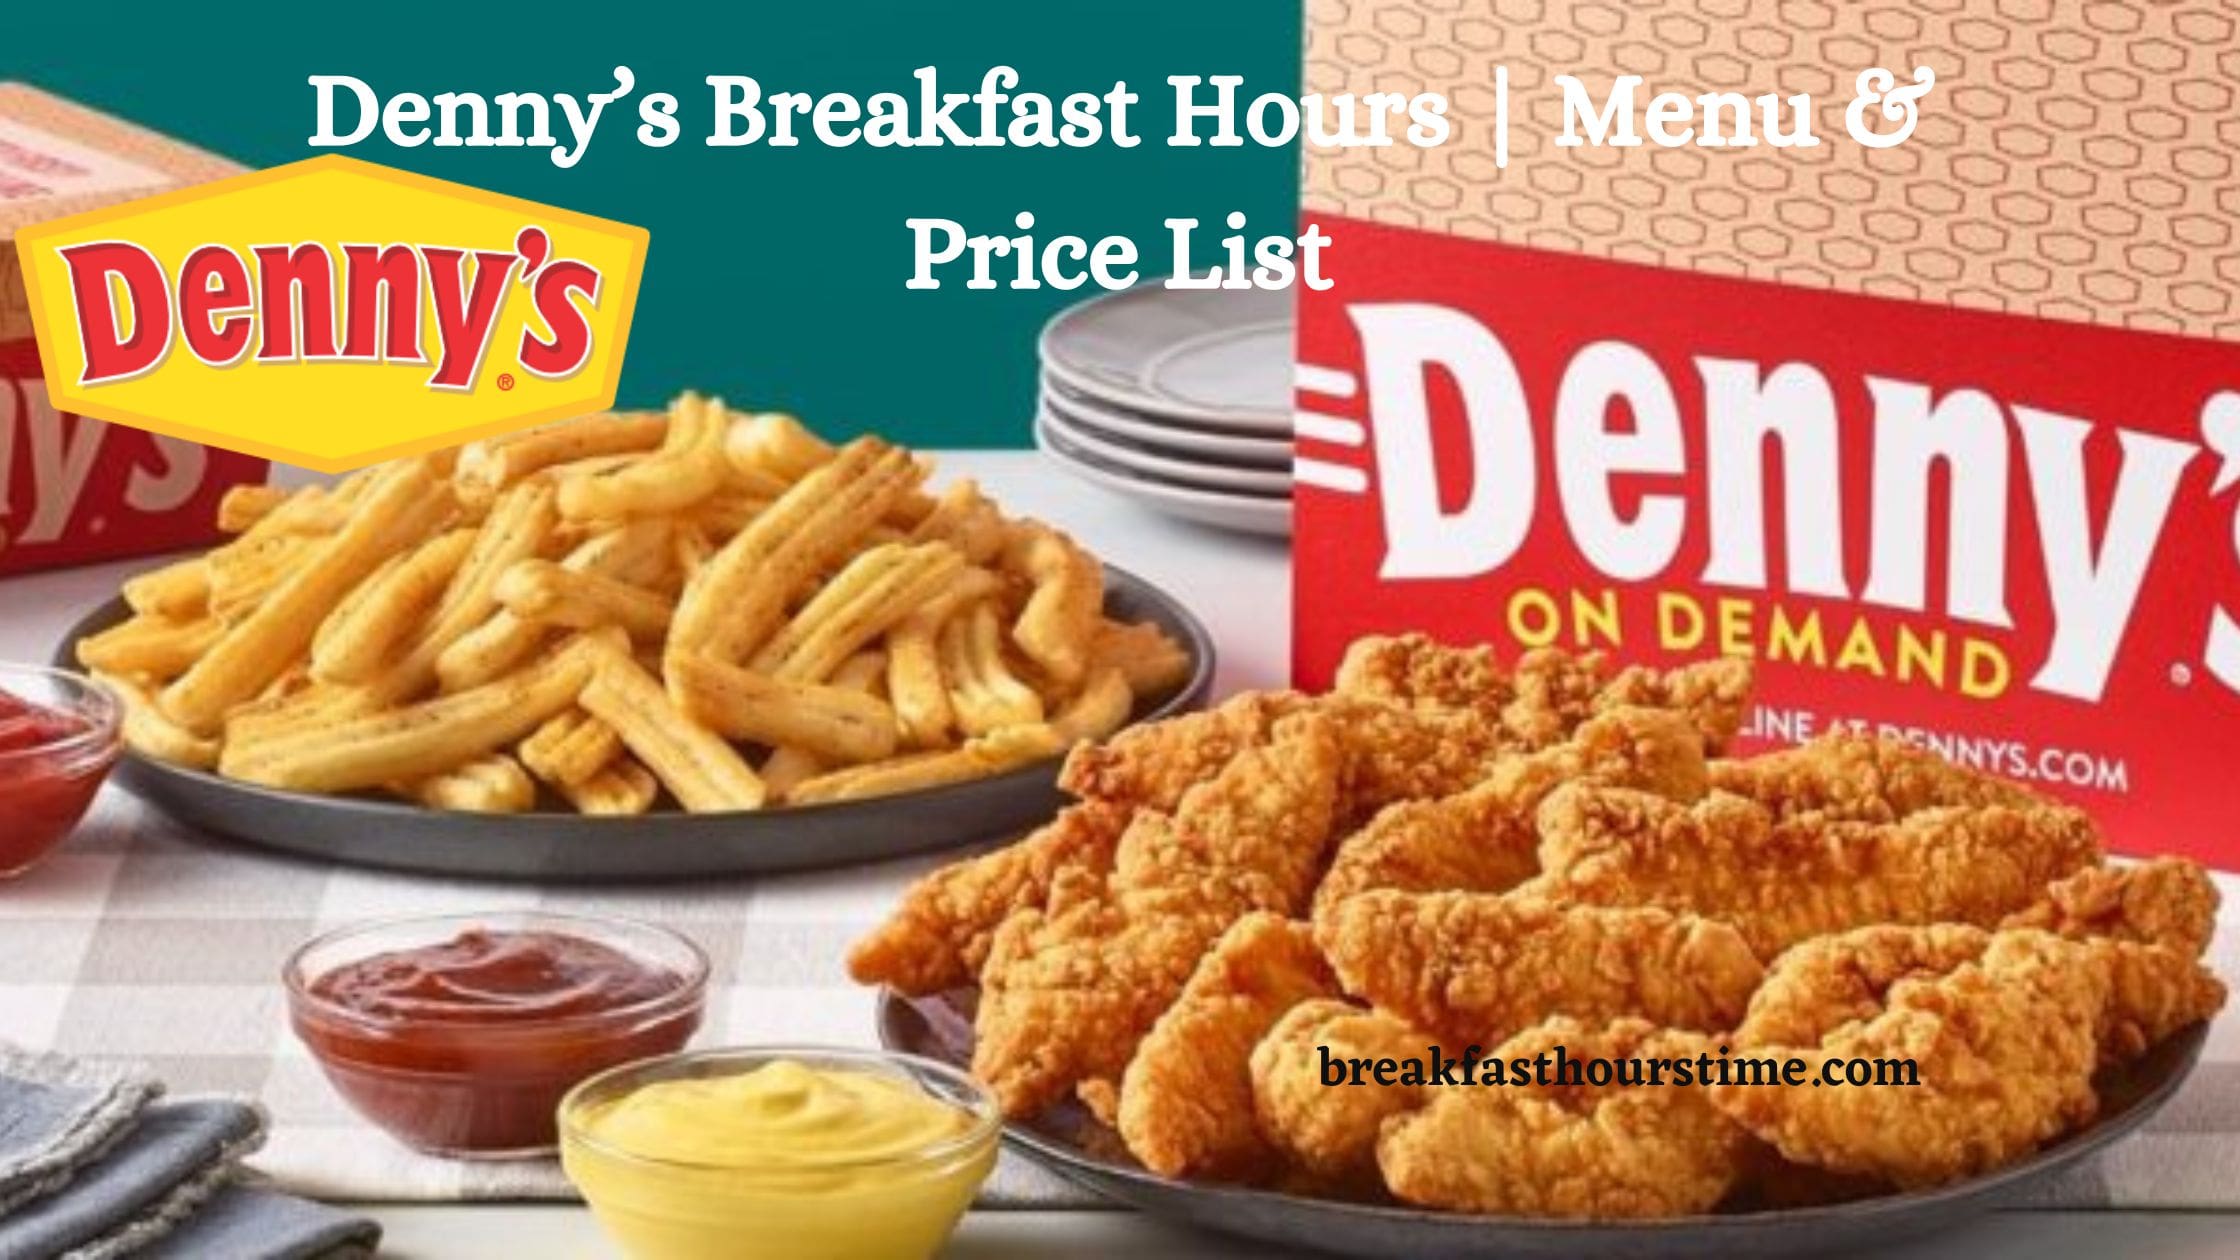 Denny’s Breakfast Hours Menu & Price List